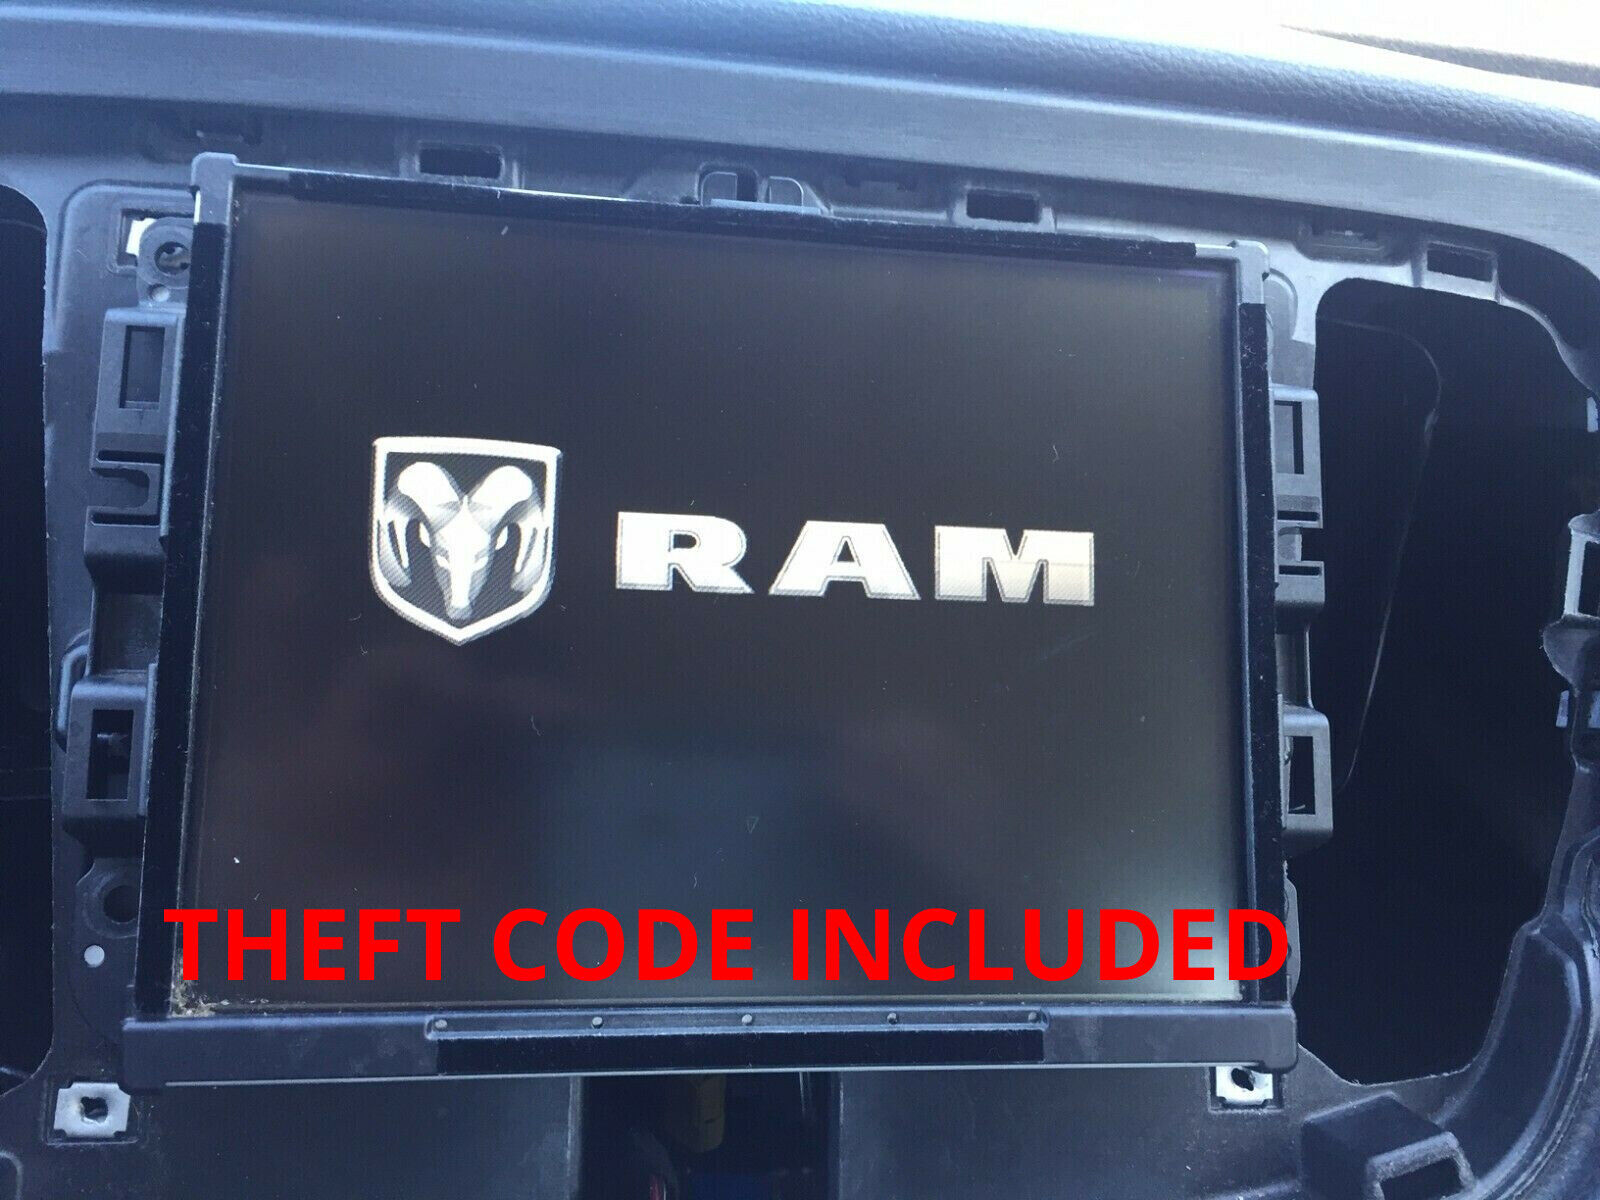 13-18 dodge ram ,jeep grand cherokee RA3 8.4 radio display with theft code